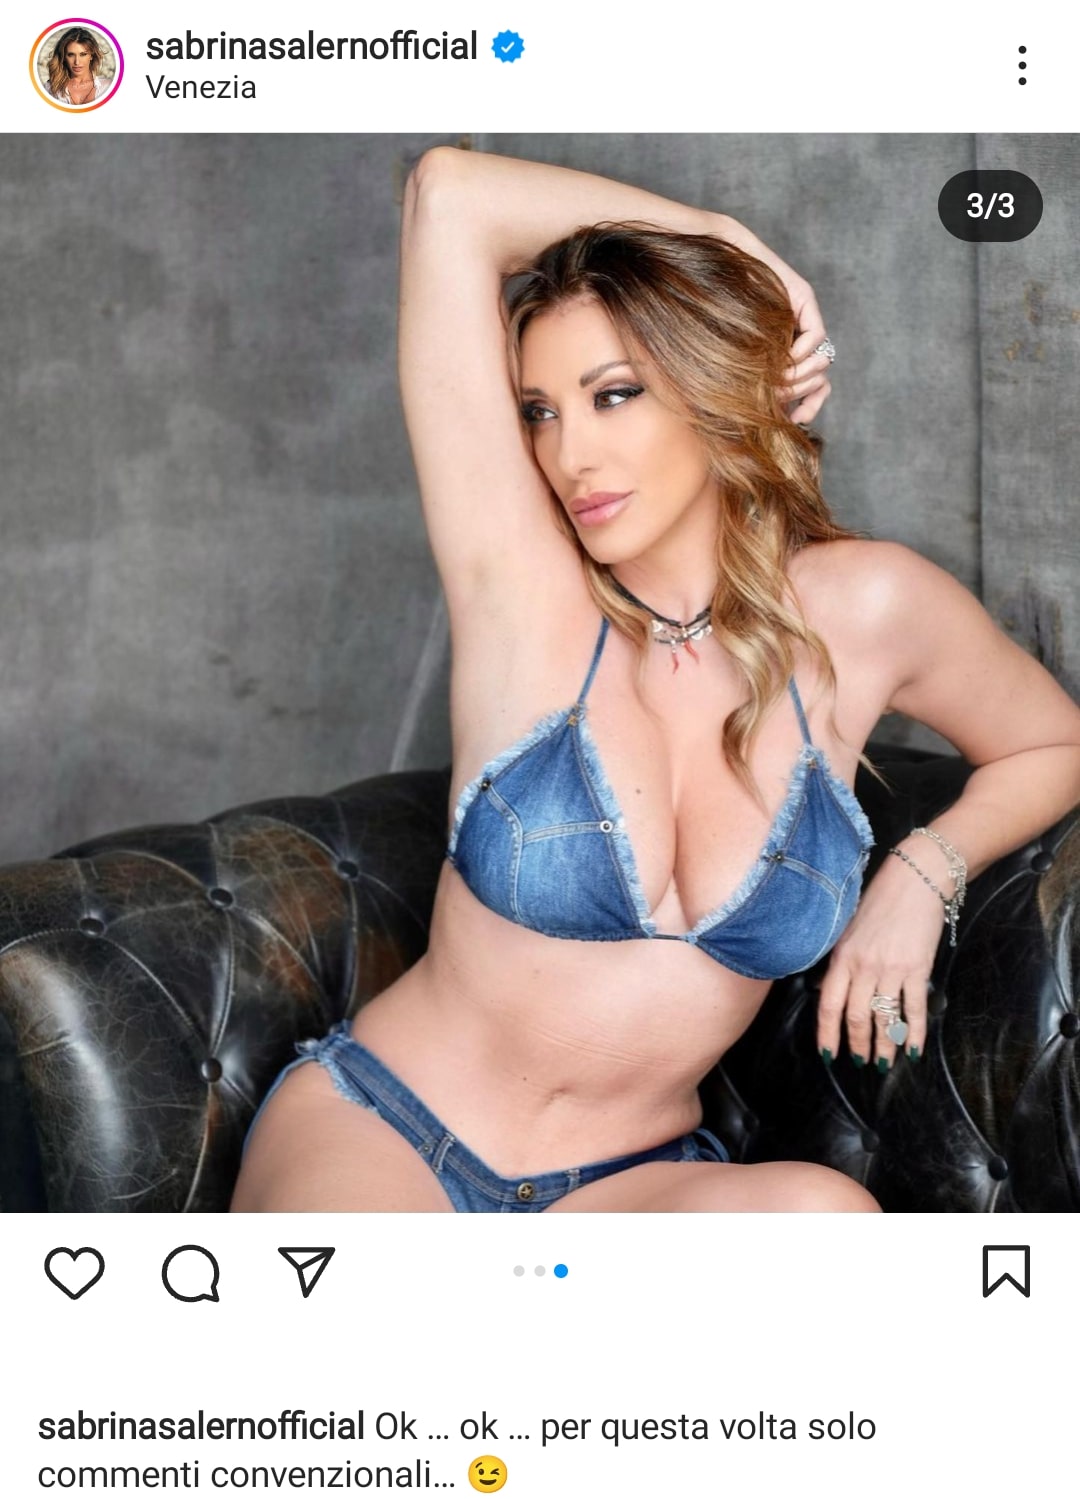 Sabrina Salerno in lingerie di jeans. Fonte: sabrinasalernofficial - Instagram